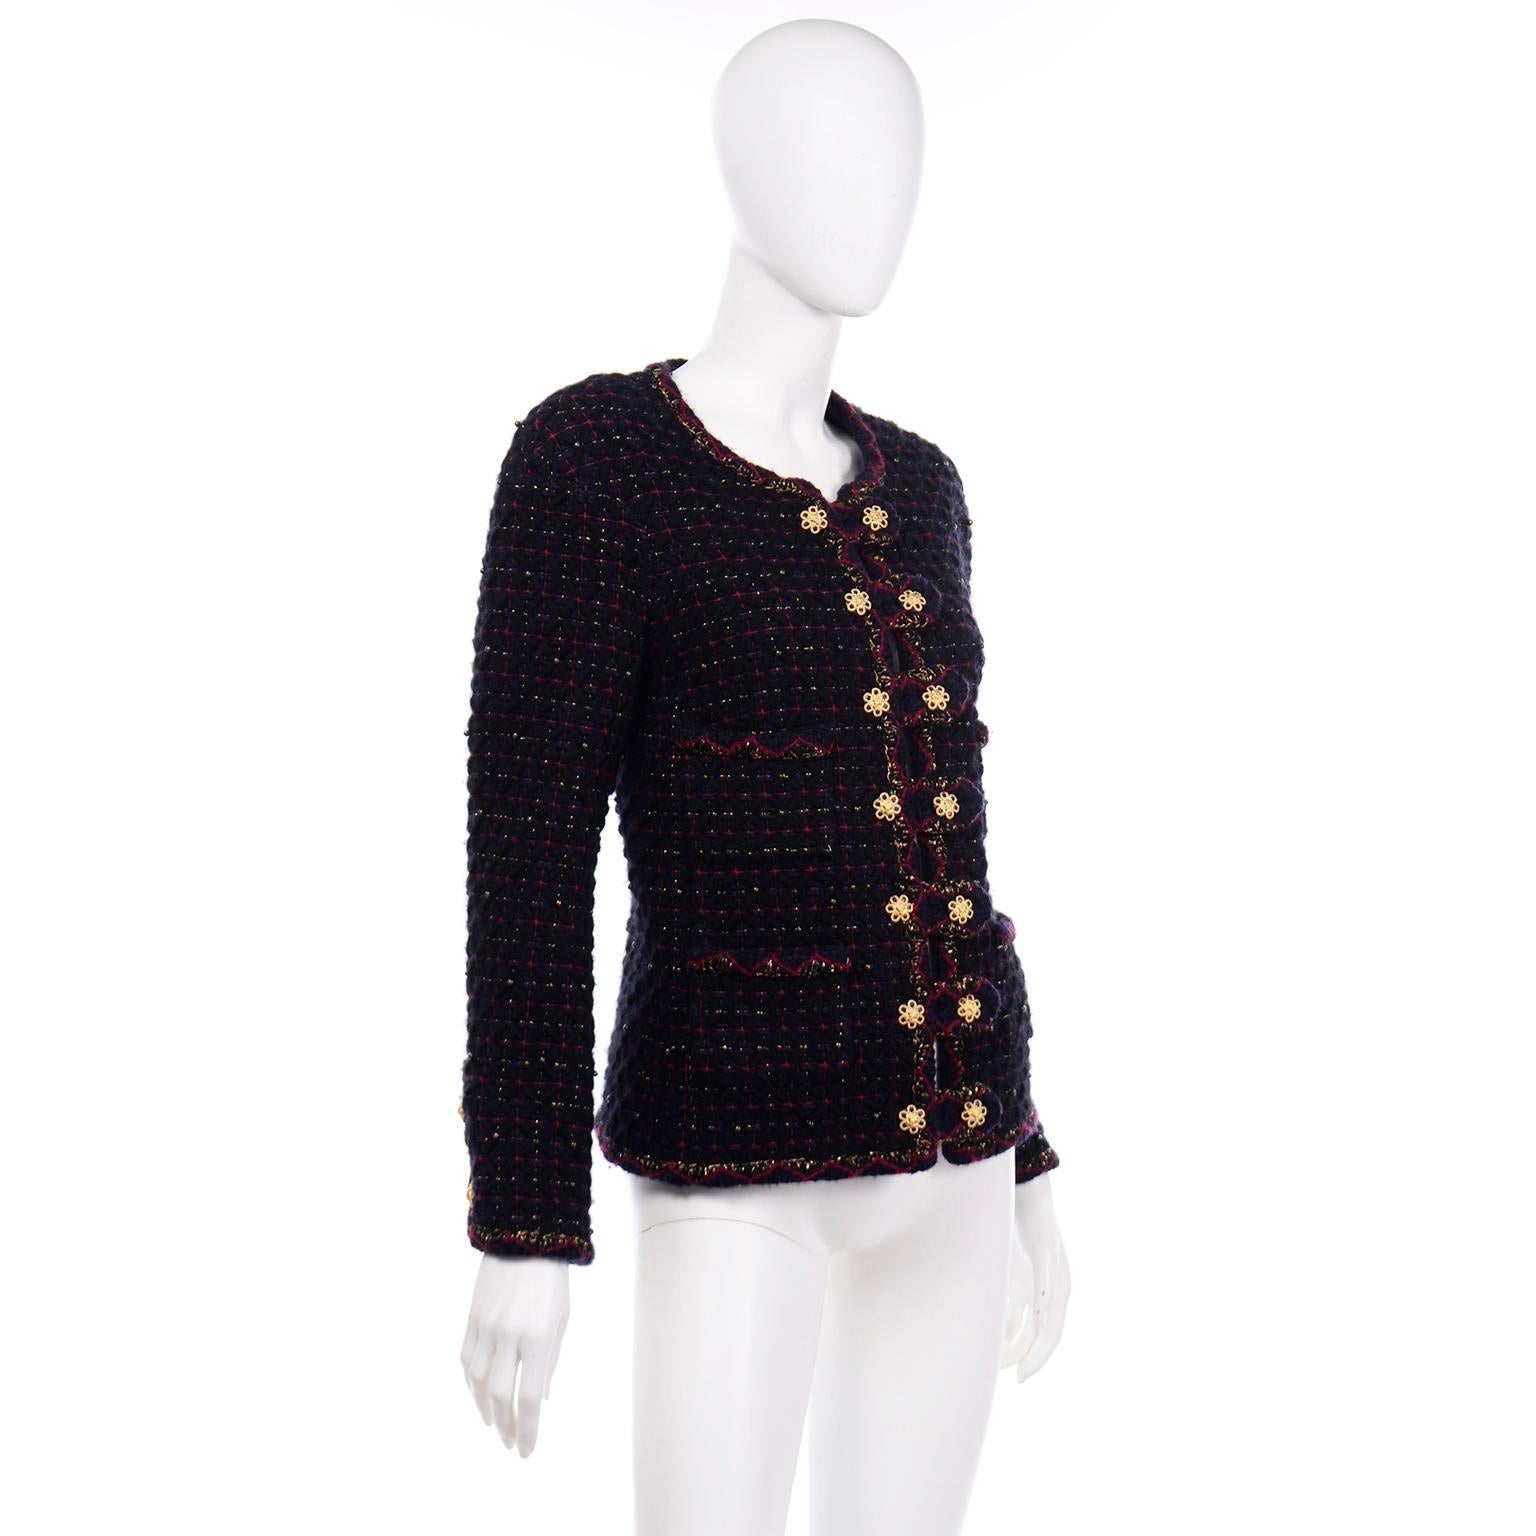 Women's Chanel 2015 Paris Salzburg Collection $14250 Tweed Documented Runway Jacket